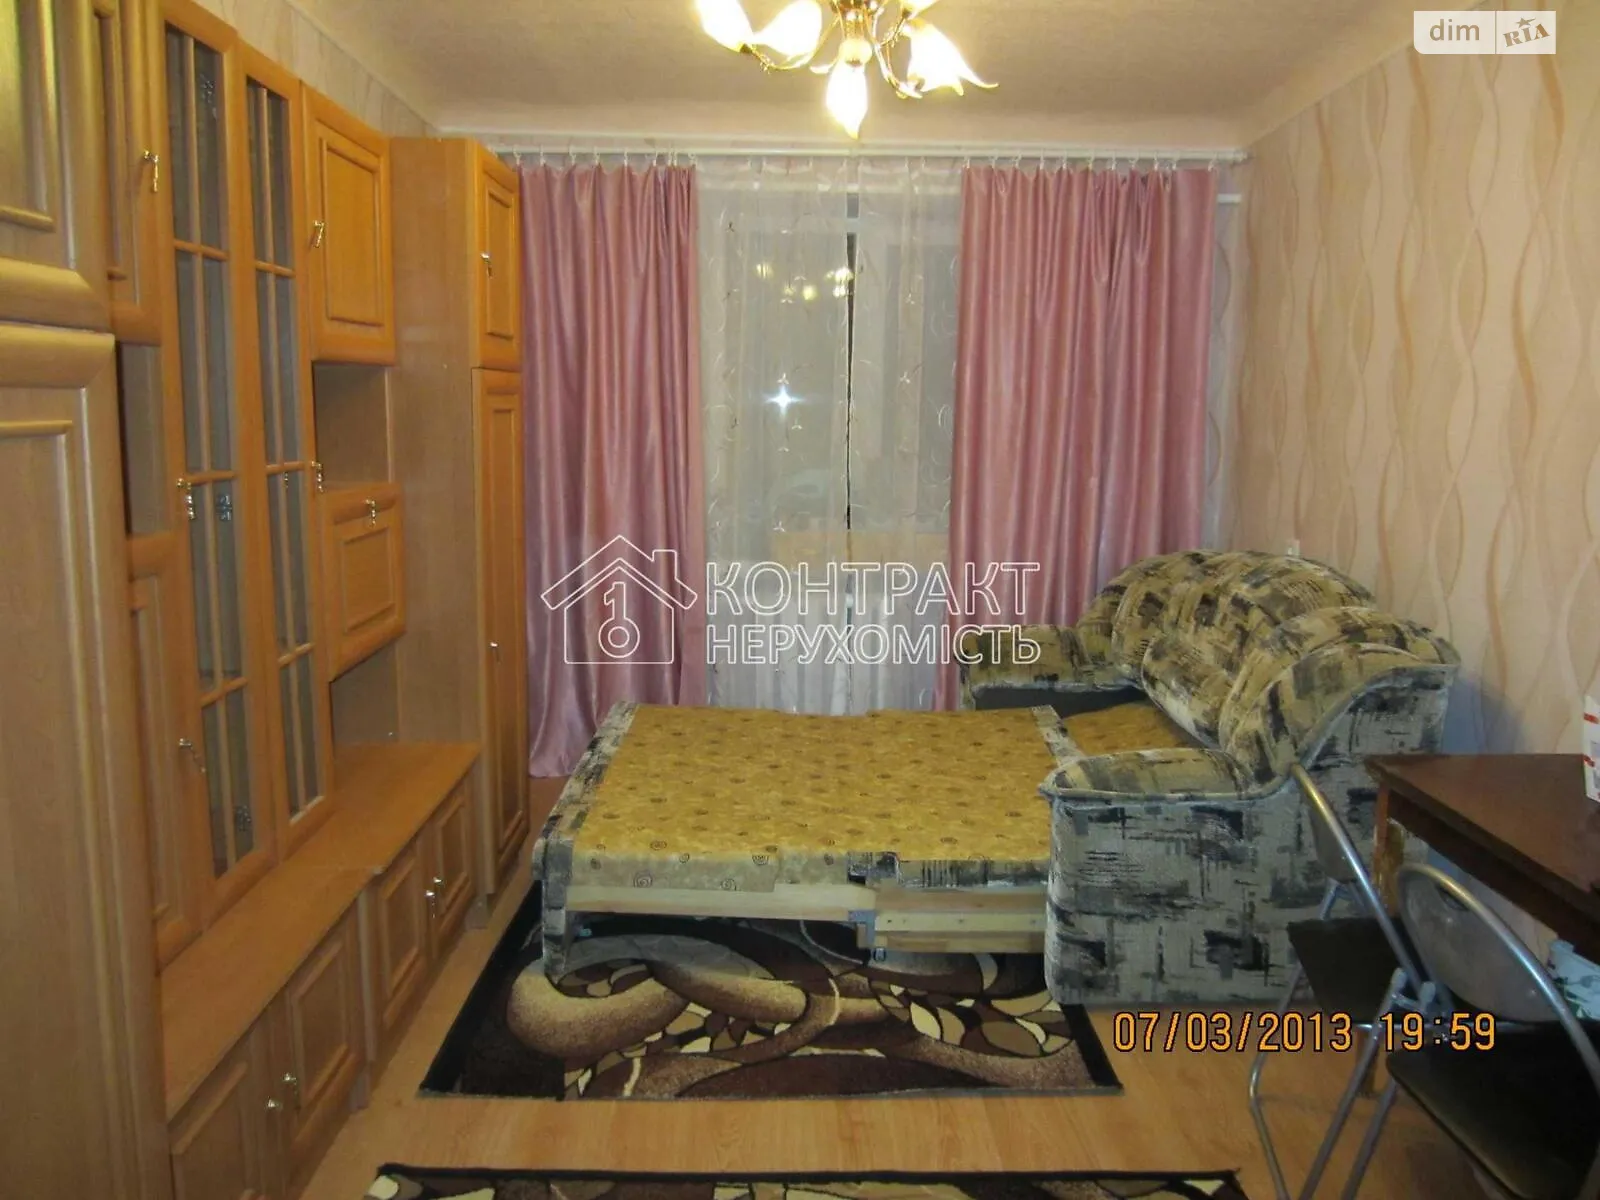 Продается комната 99 кв. м в Харькове - фото 2